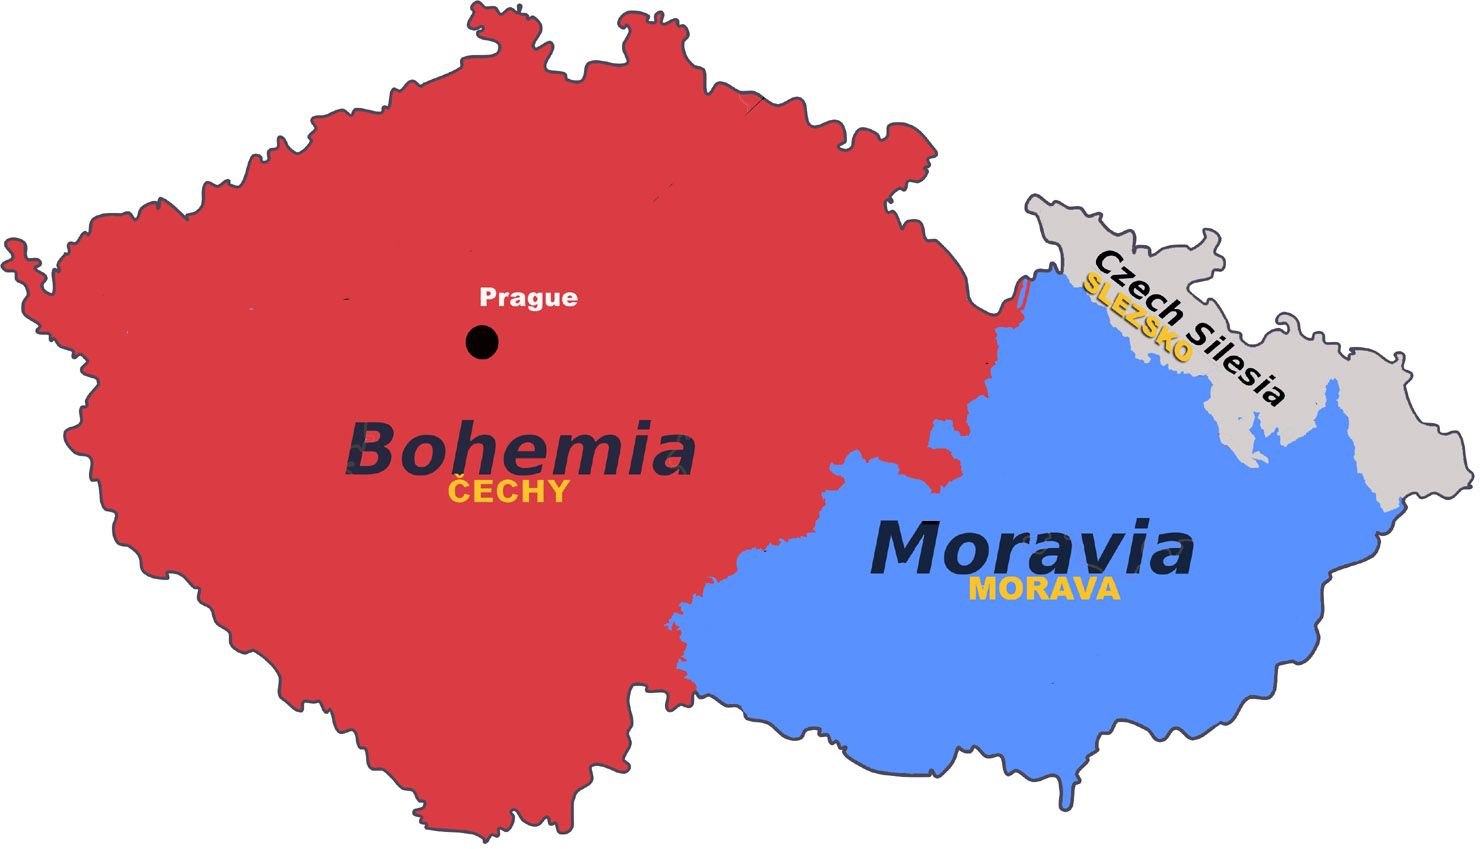 Моравия на карте Чехии. Карта Великой Моравии. Богемия и Моравия на карте Чехии.